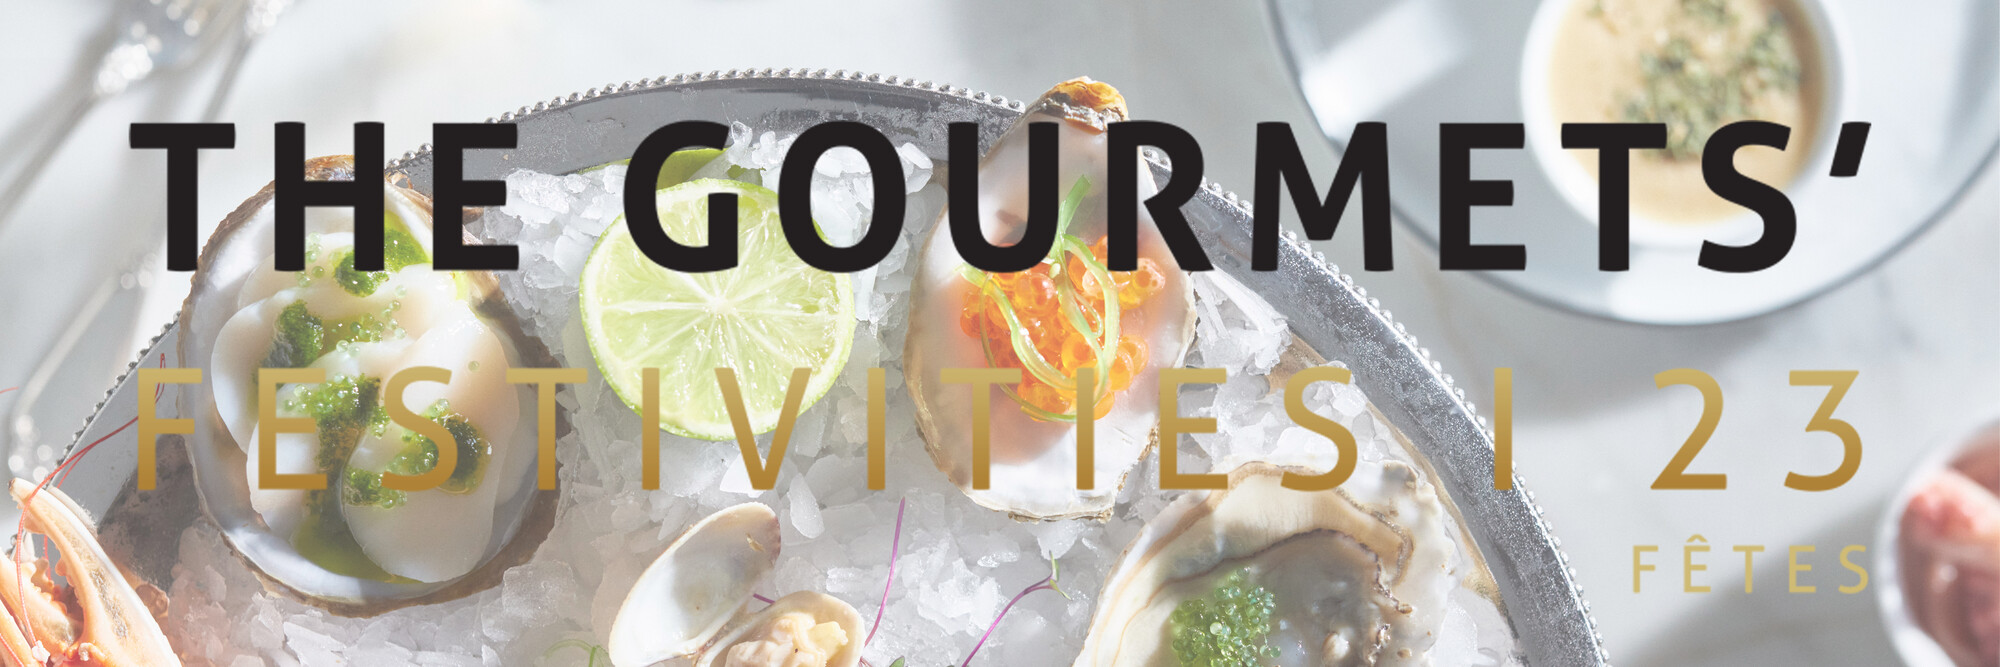 The Gourmets' Magazine - Festivités 2023